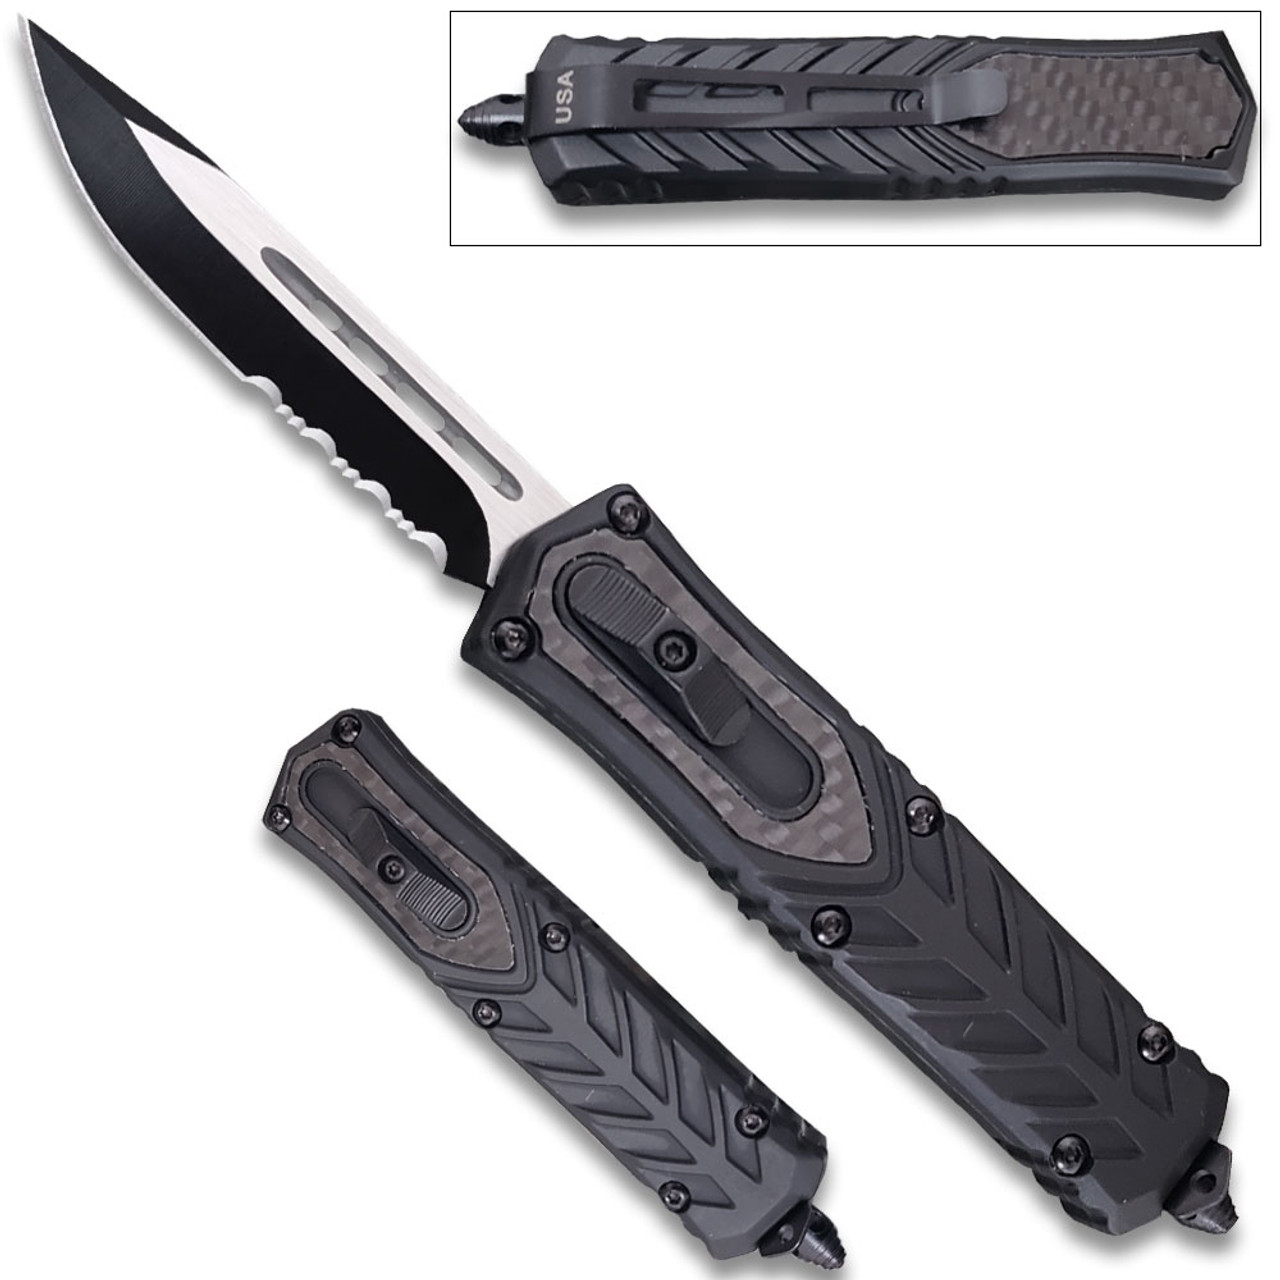 Delta OTF Carbon Fiber Black Drop Point Serrated Edge Knife - Edge Import